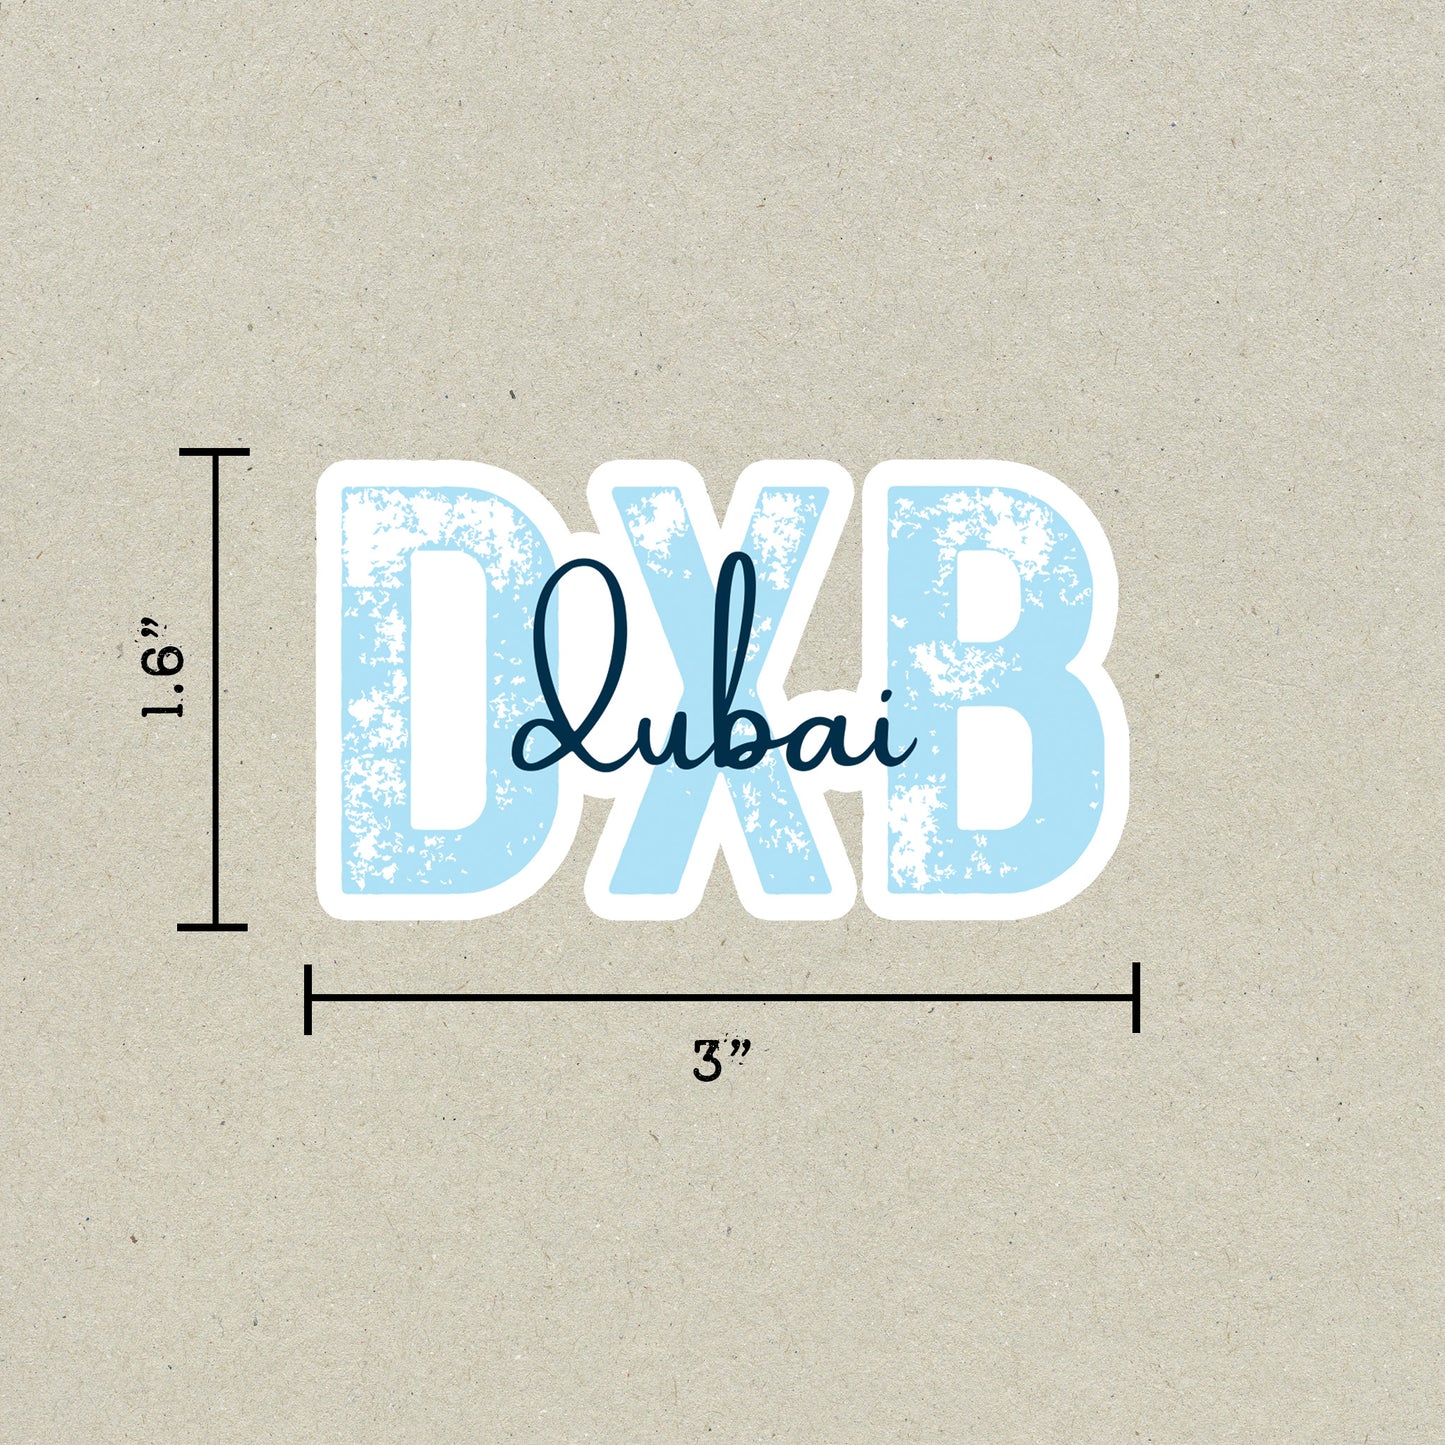 DXB Dubai Airport Code Sticker